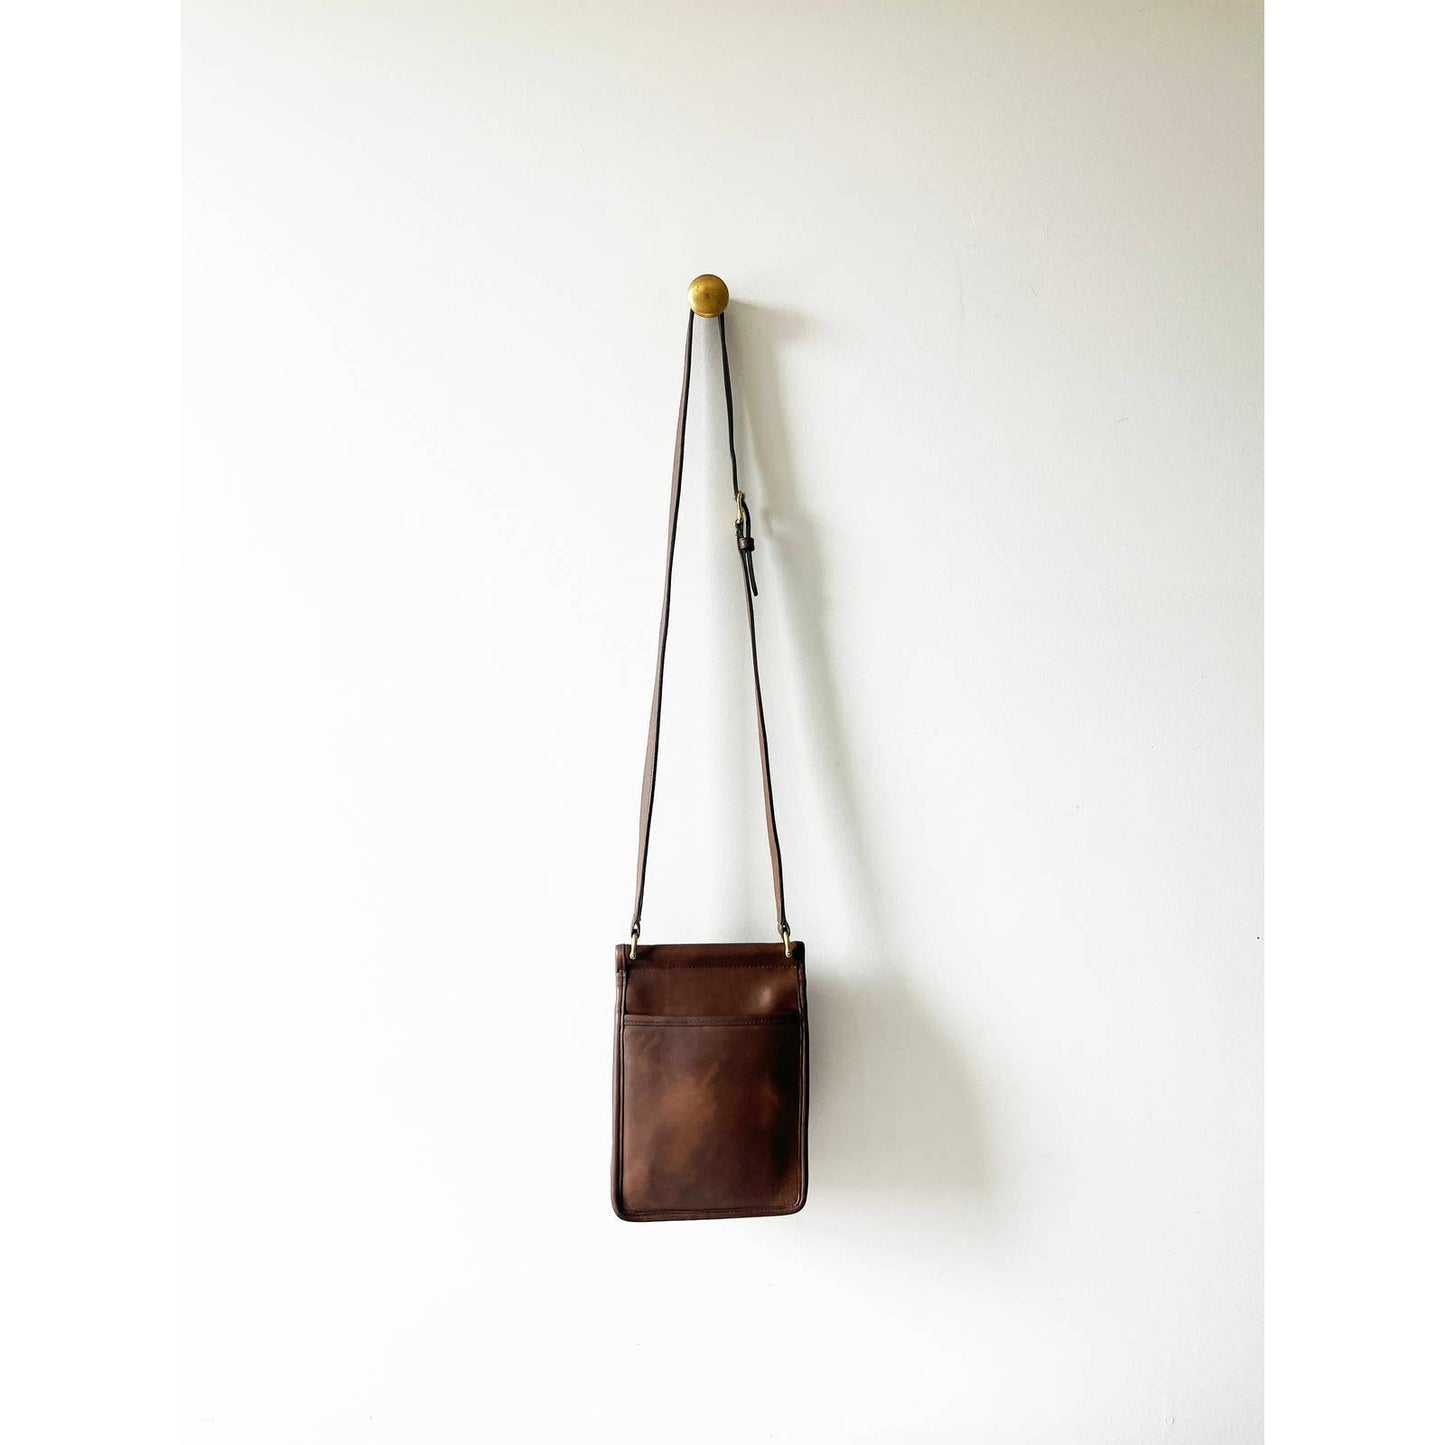 Vintage Coach Beige Murphy Bag | Small Leather Crossbody Bag No 9930